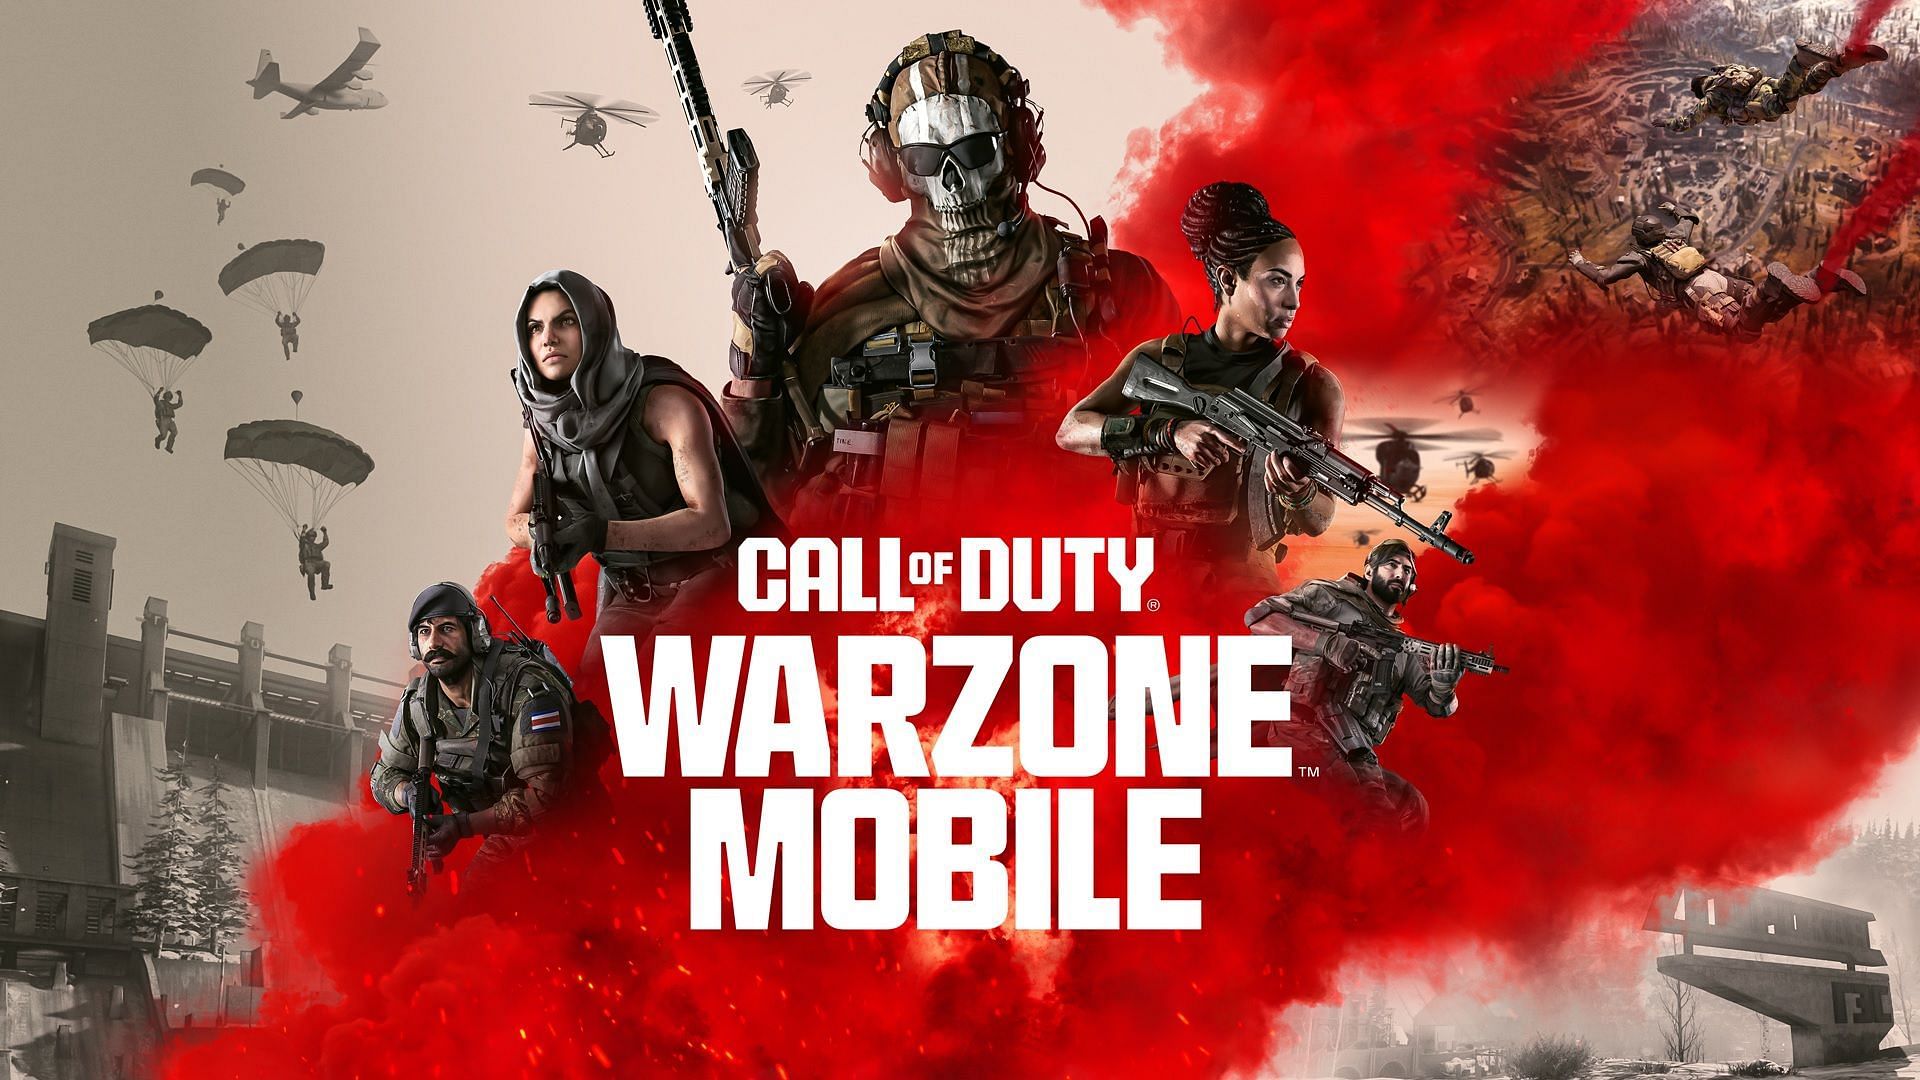 warzone mobile season 3 ranked play